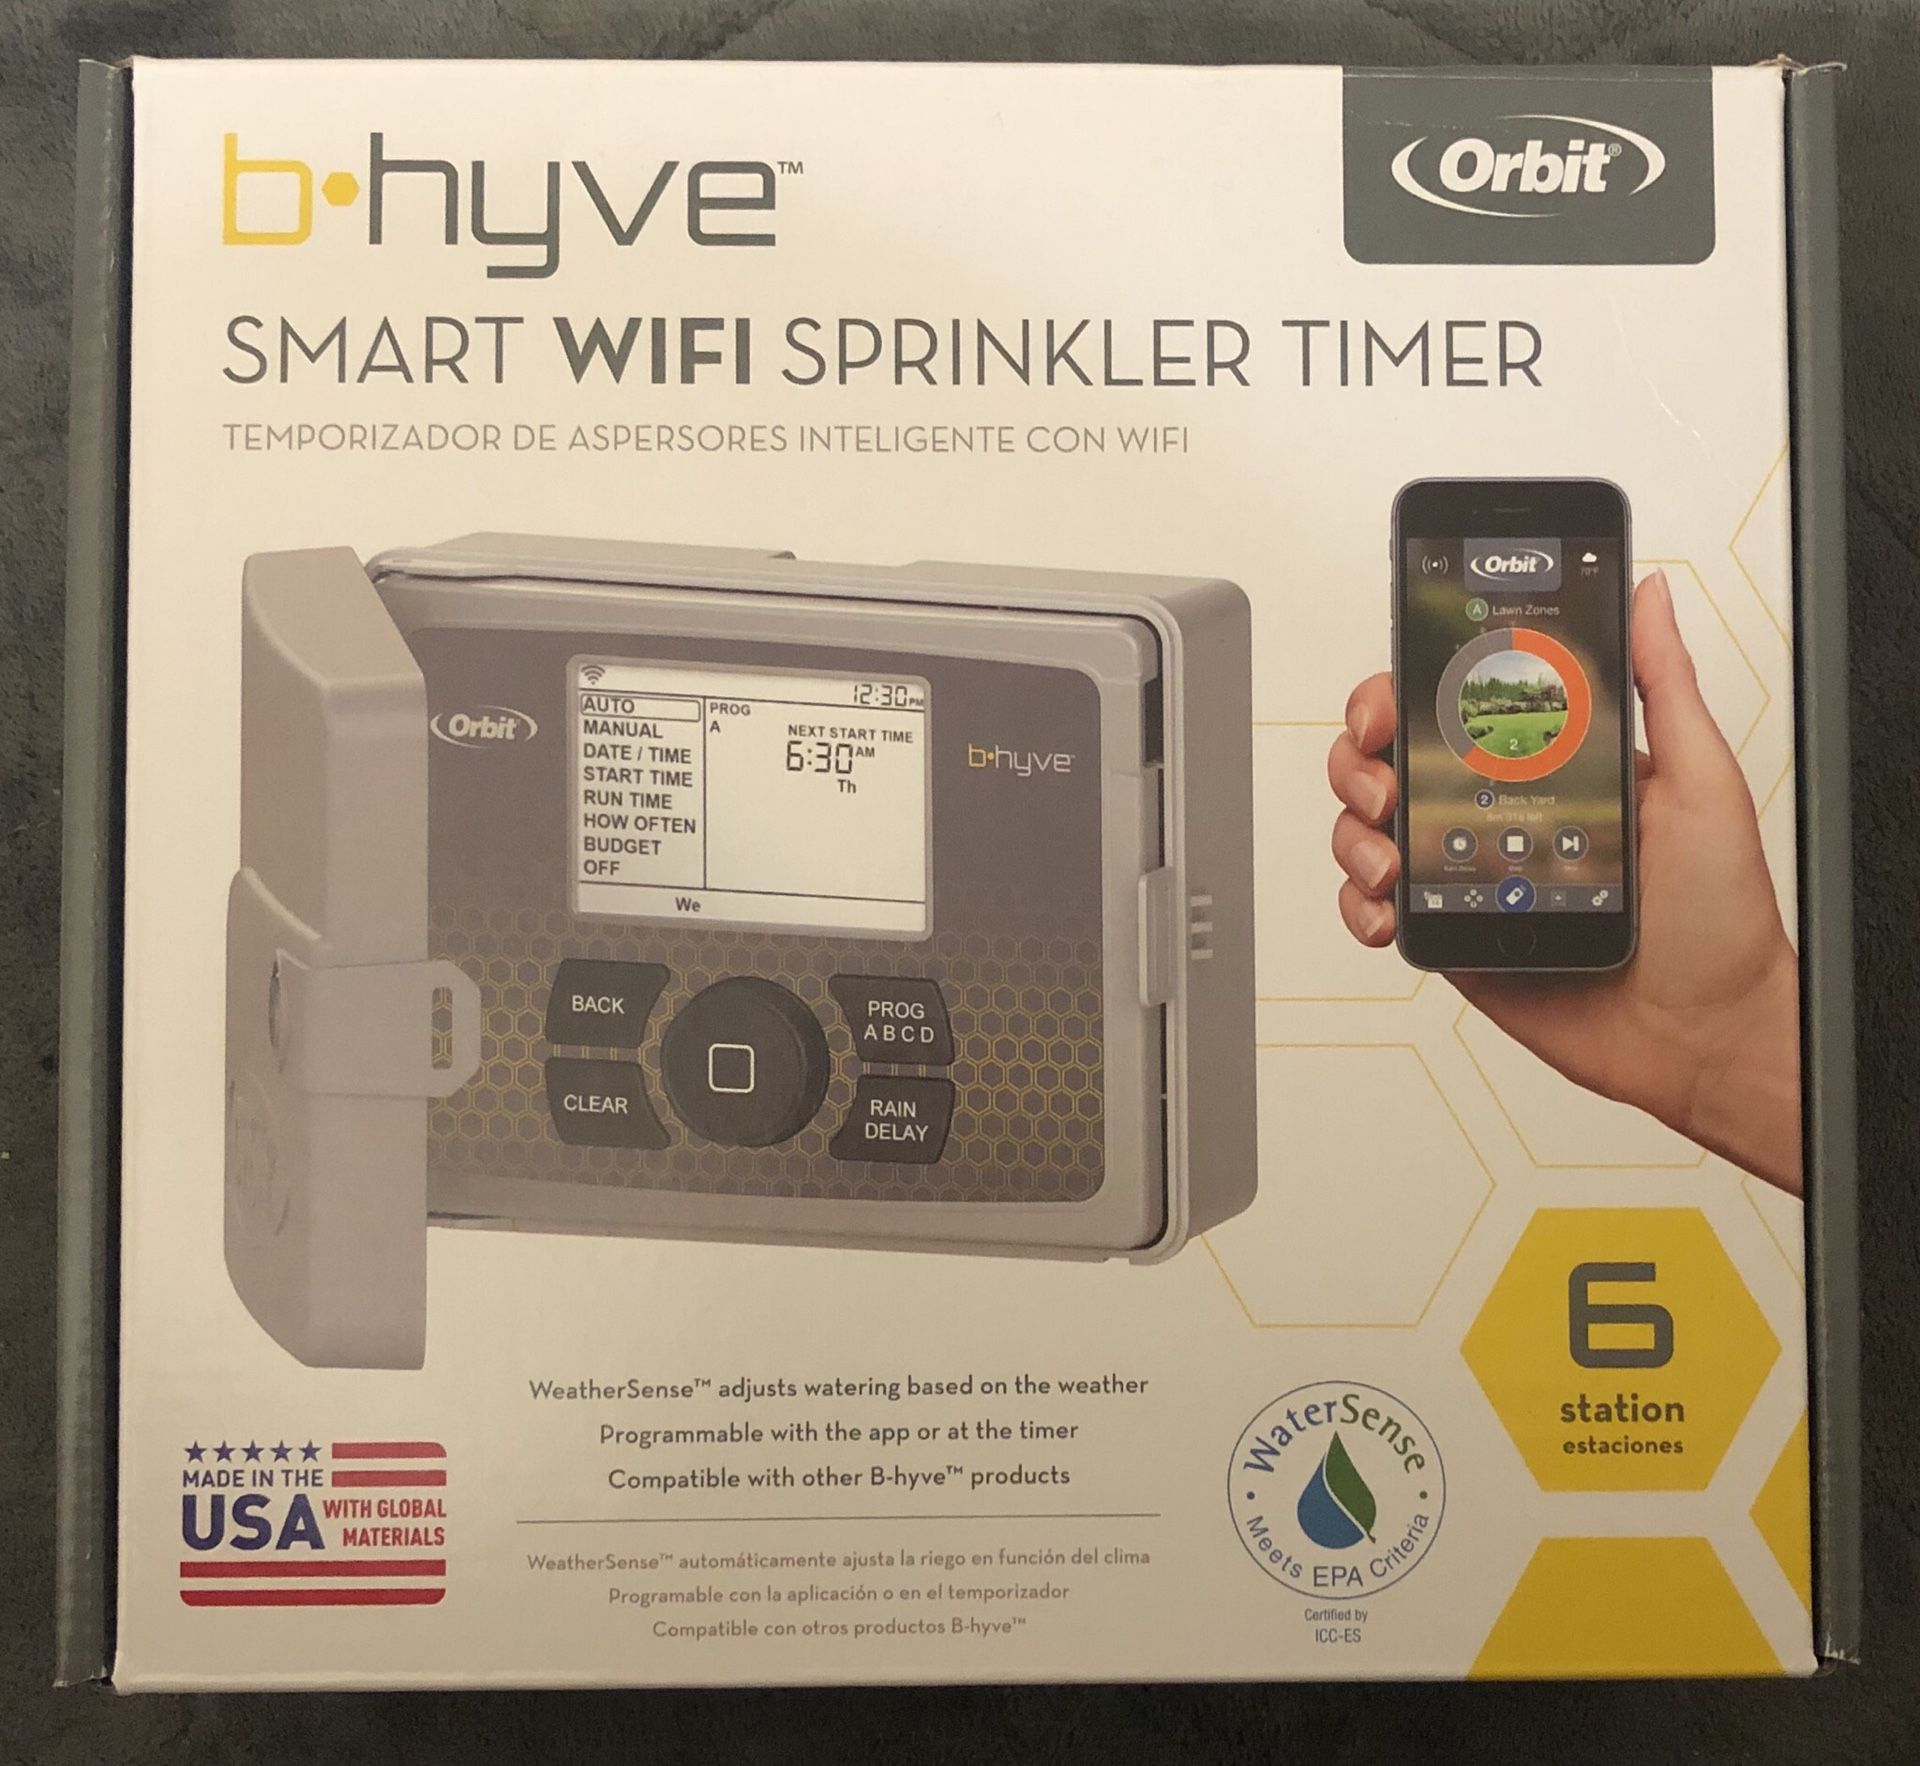 Orbit b-hyve Smart WiFi Sprinkler Timer 6 Station WaterSense